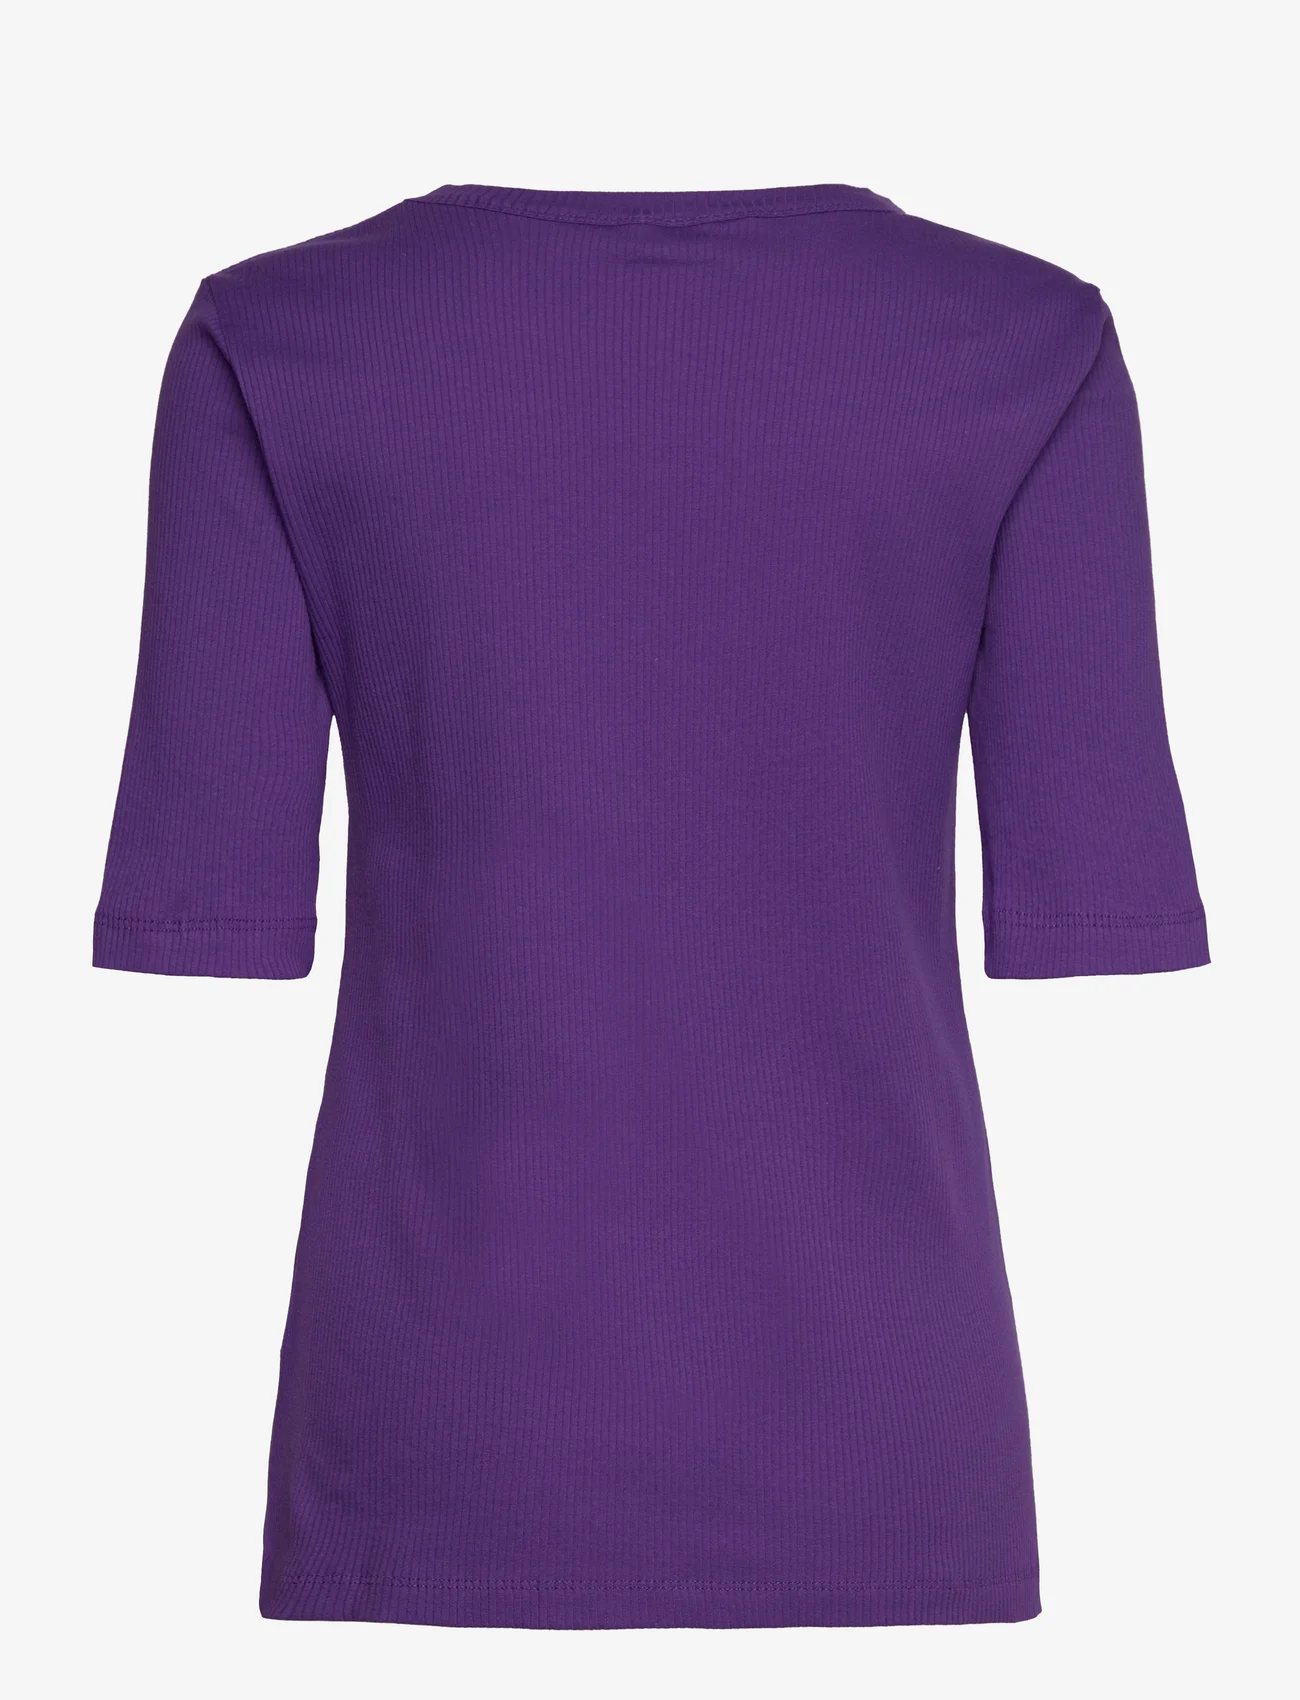 InWear - DagnaIW T-Shirt - lowest prices - purple rain - 1